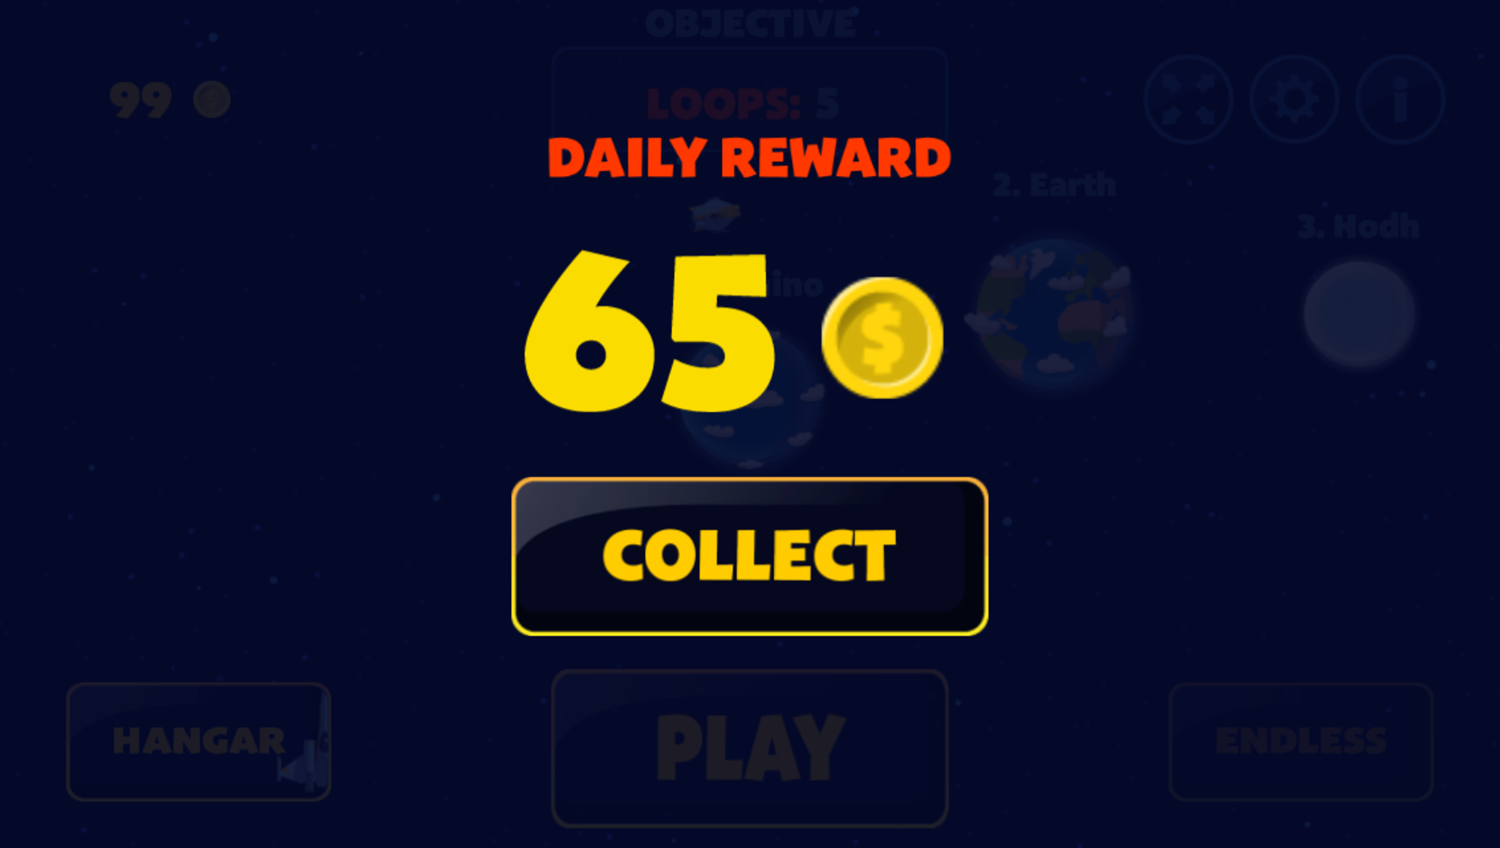 Star Battles Game Daily Reward Screenshot.